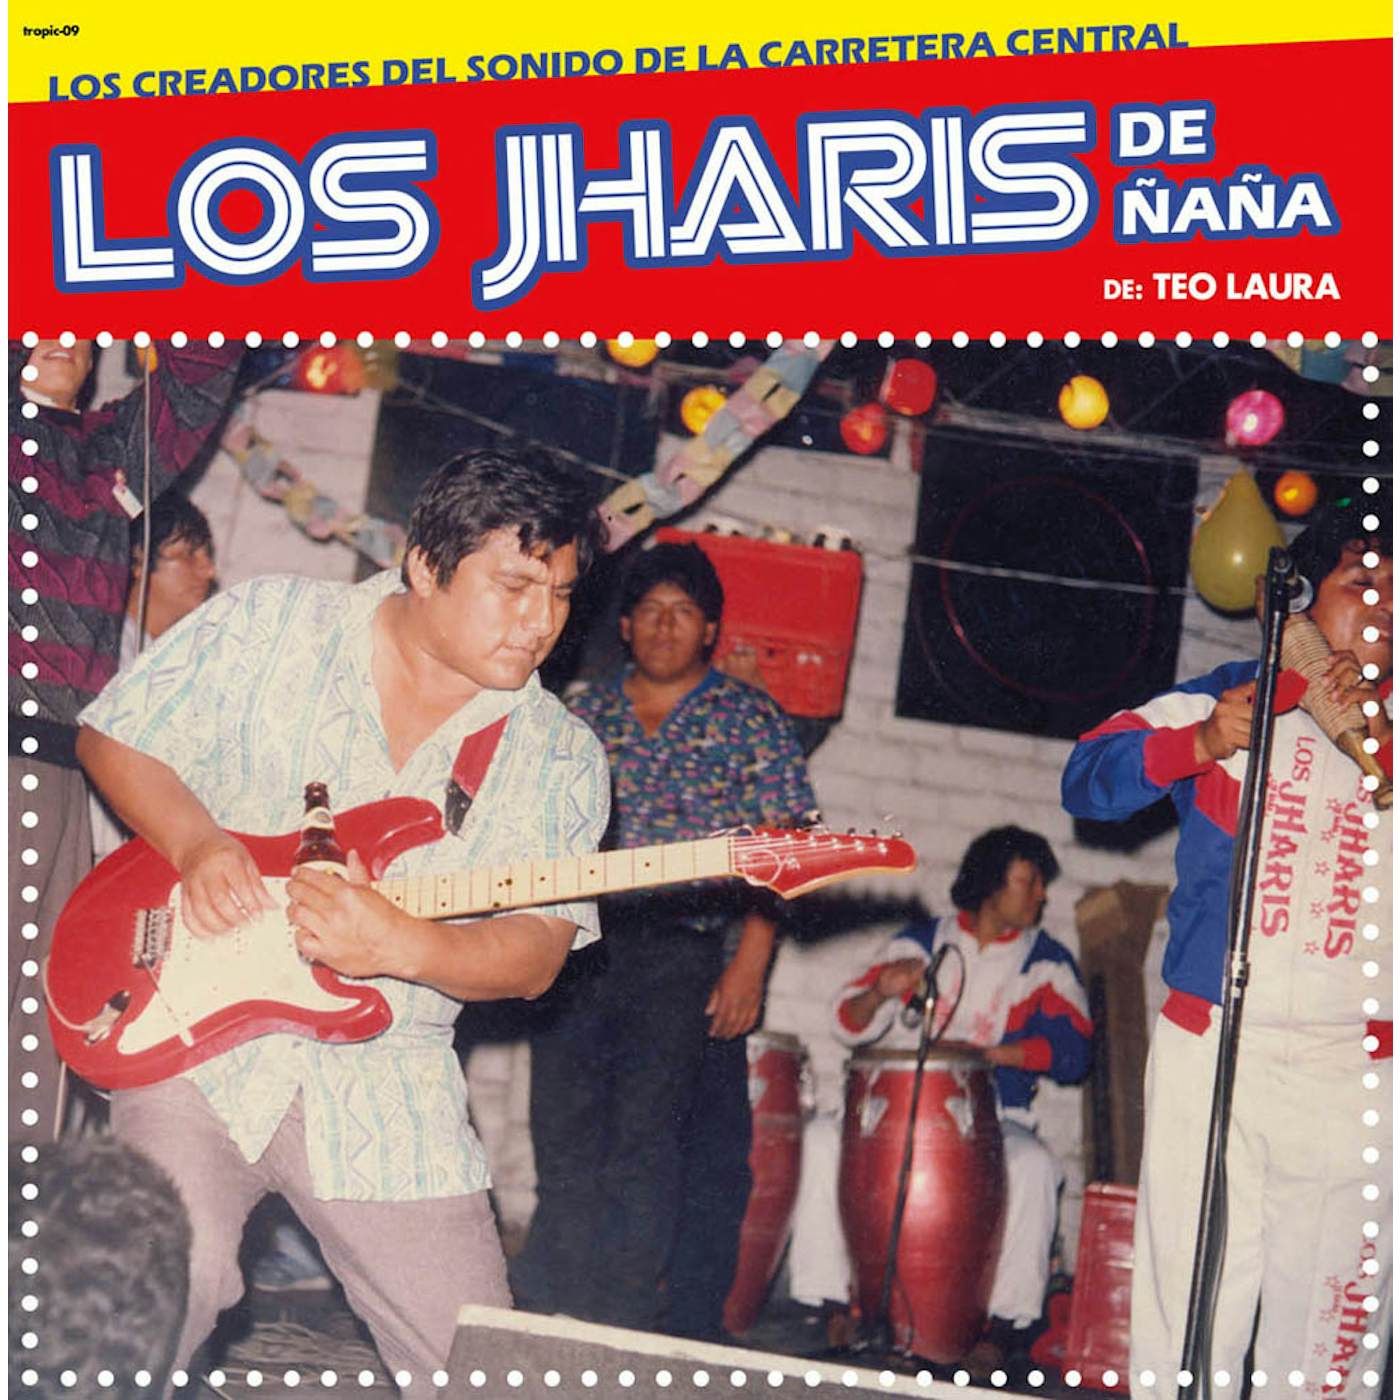 Jharis De Nana CREADORS DEL SONIDO DE LA CARRETERA CENTRAL Vinyl Record - Limited Edition